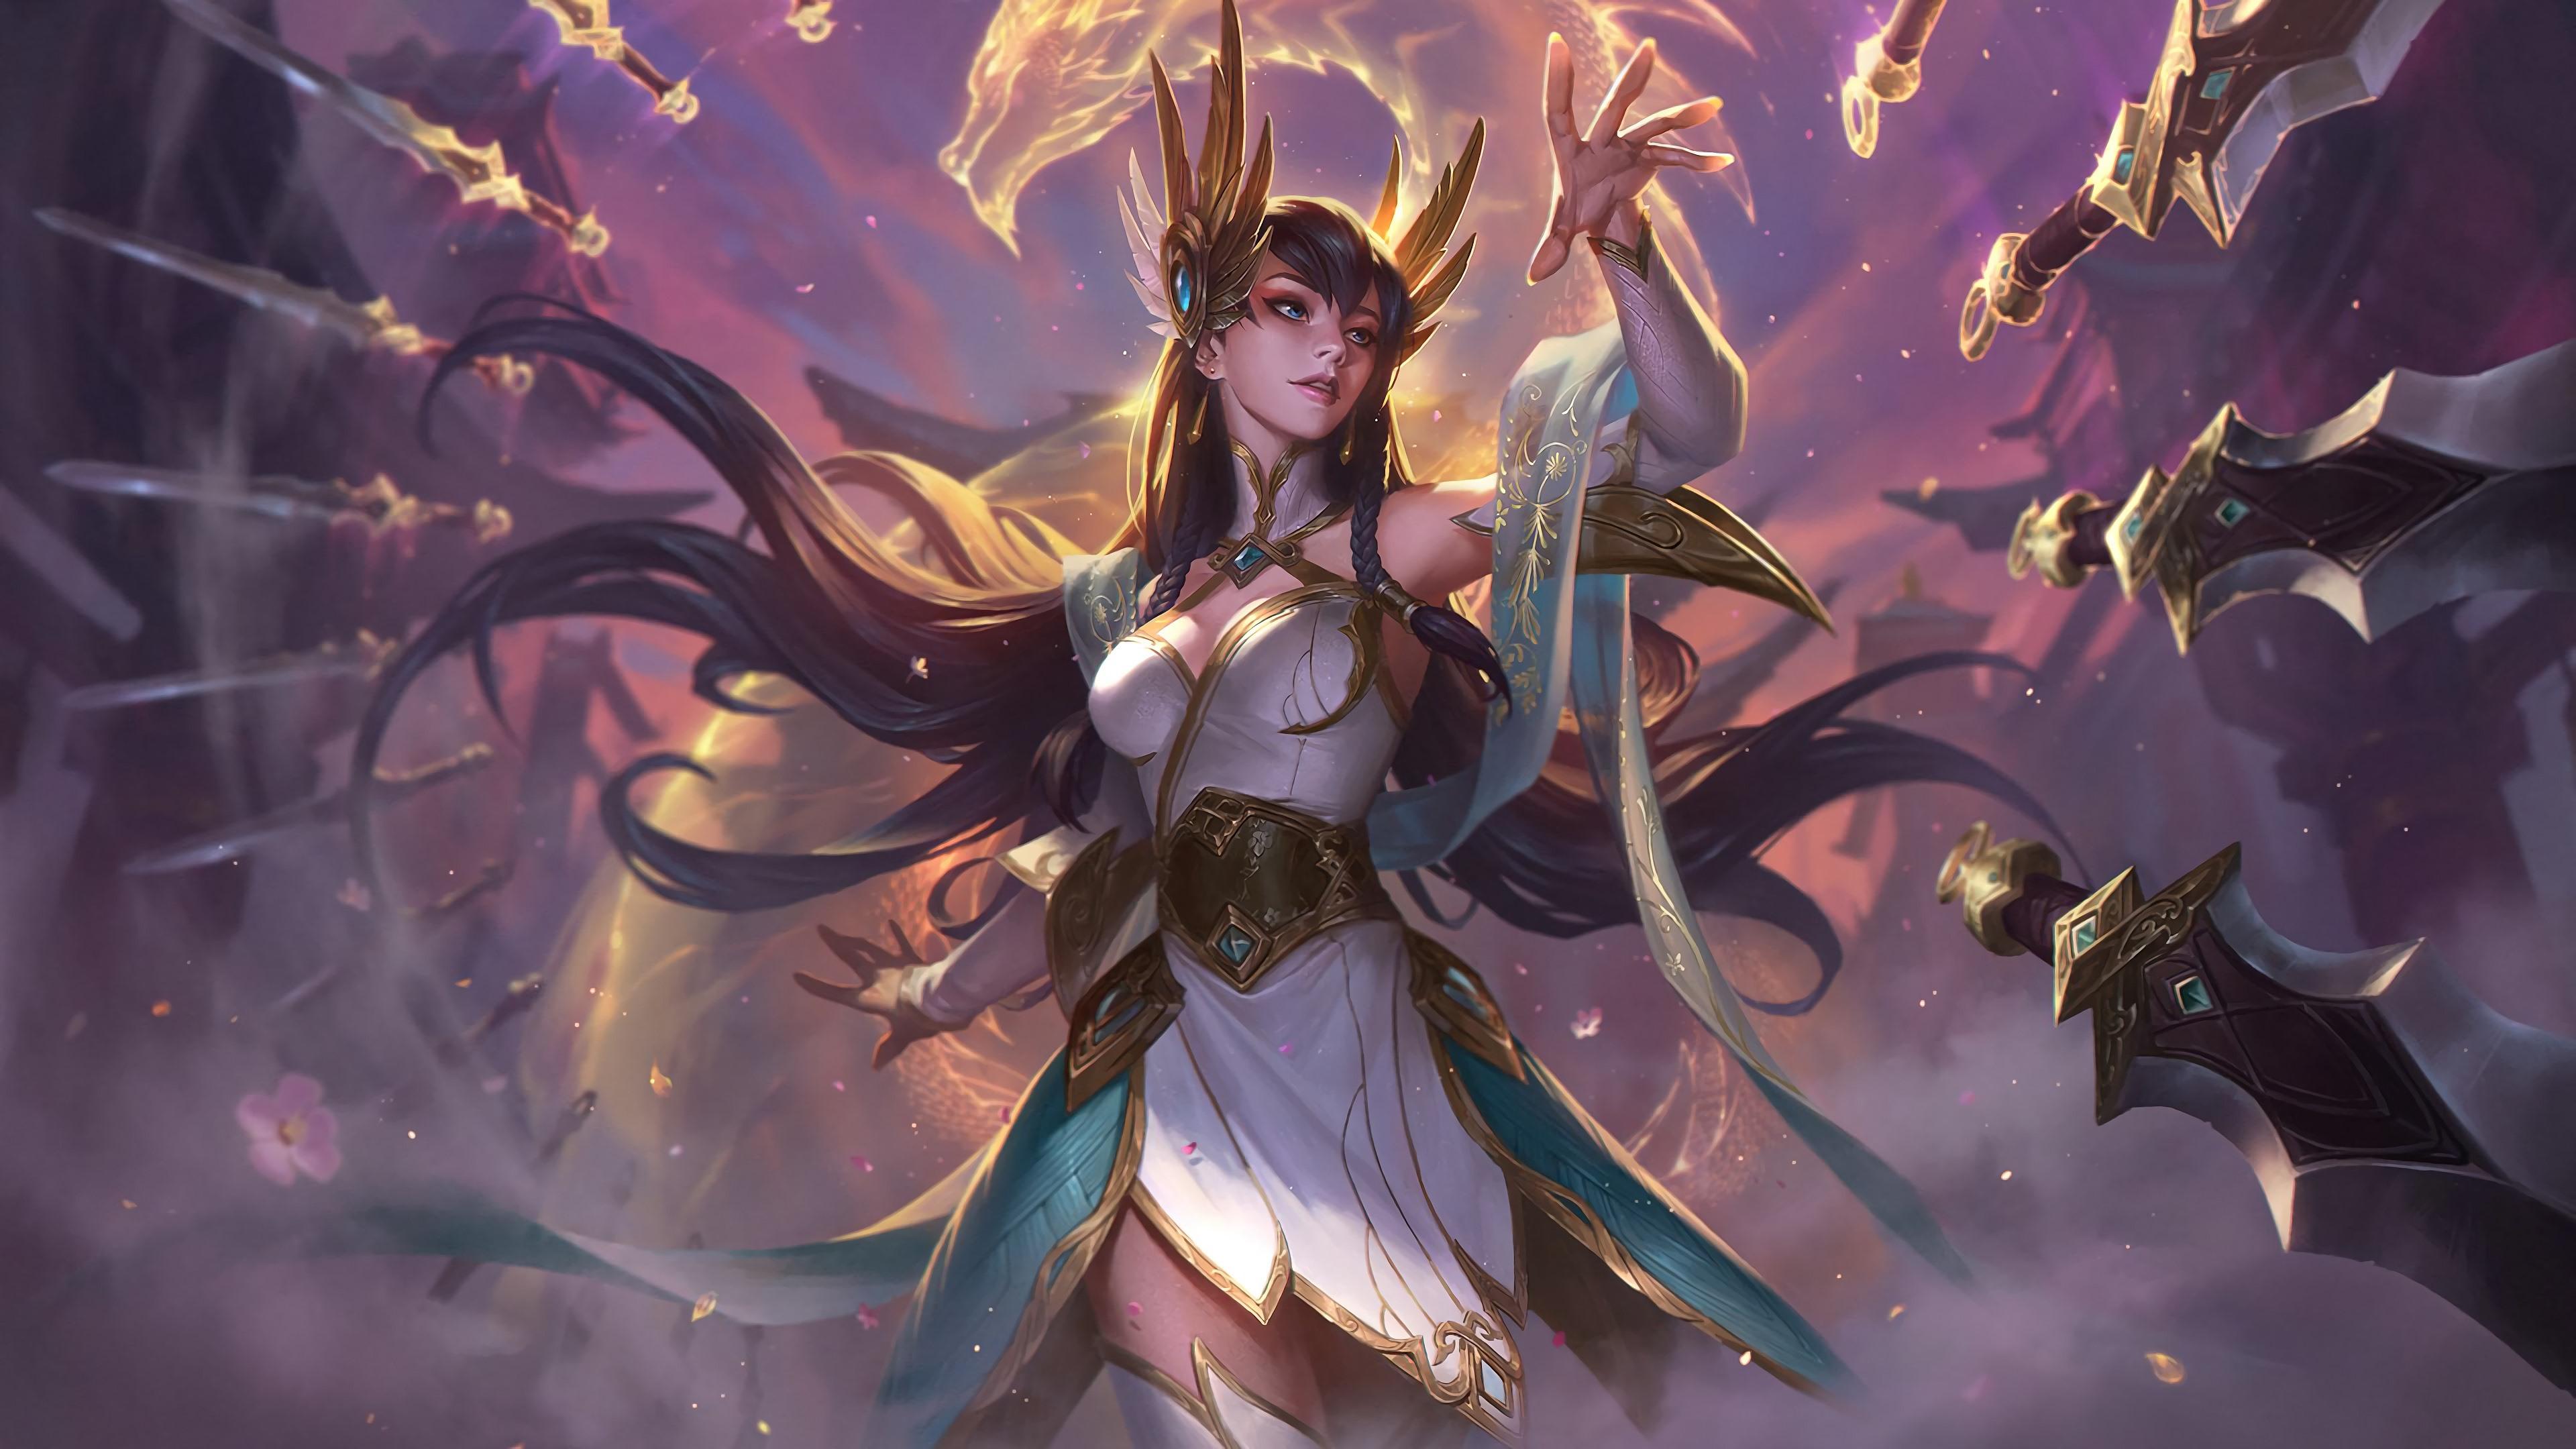 Wallpaper League of Legends, beautiful girl, hand, sword